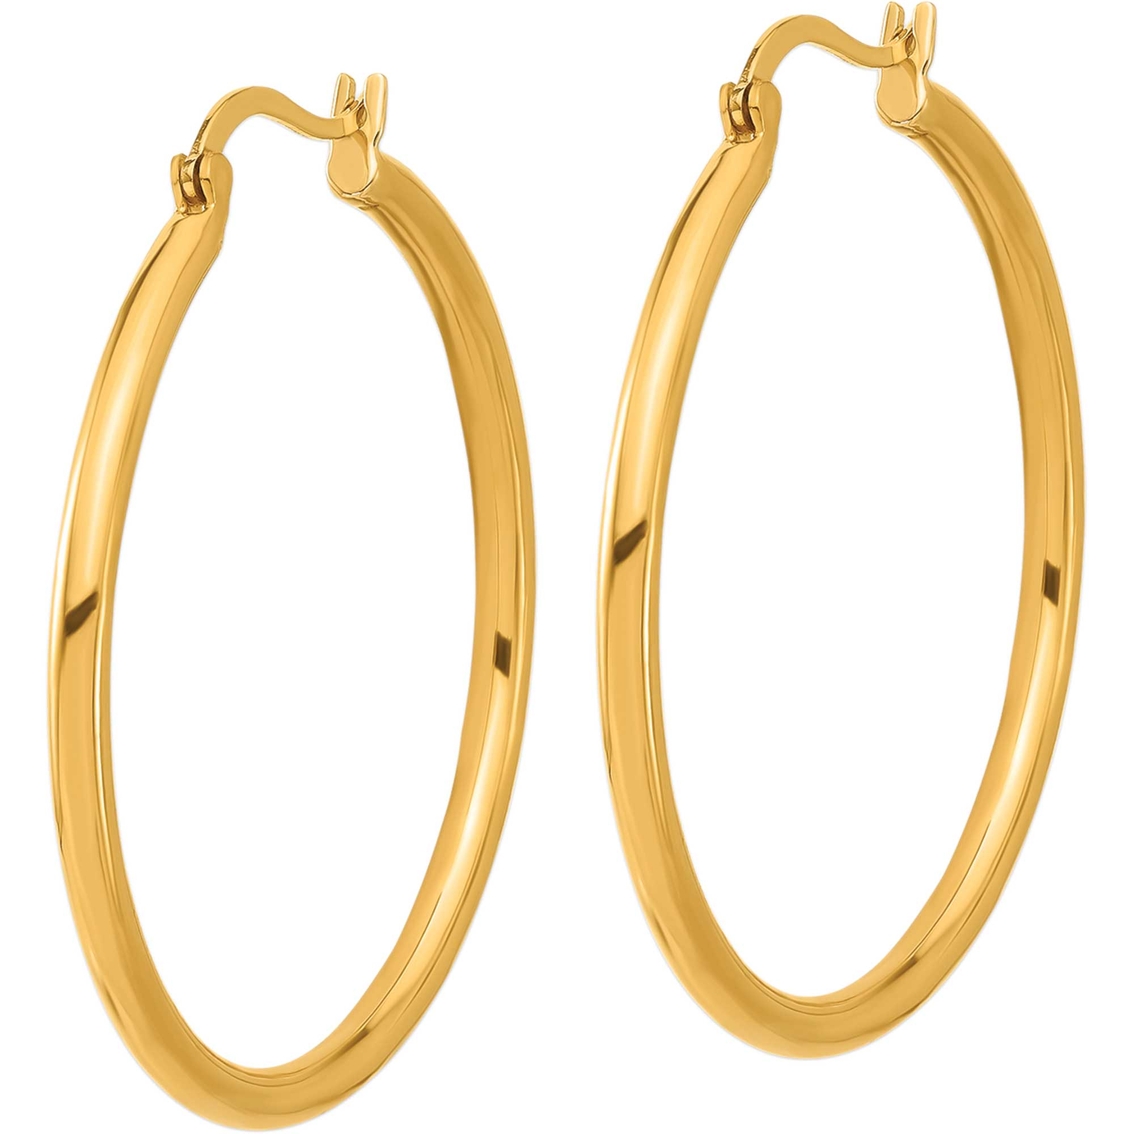 24K Pure Gold Medium High Polish Classic Hoop Earrings - Image 2 of 3